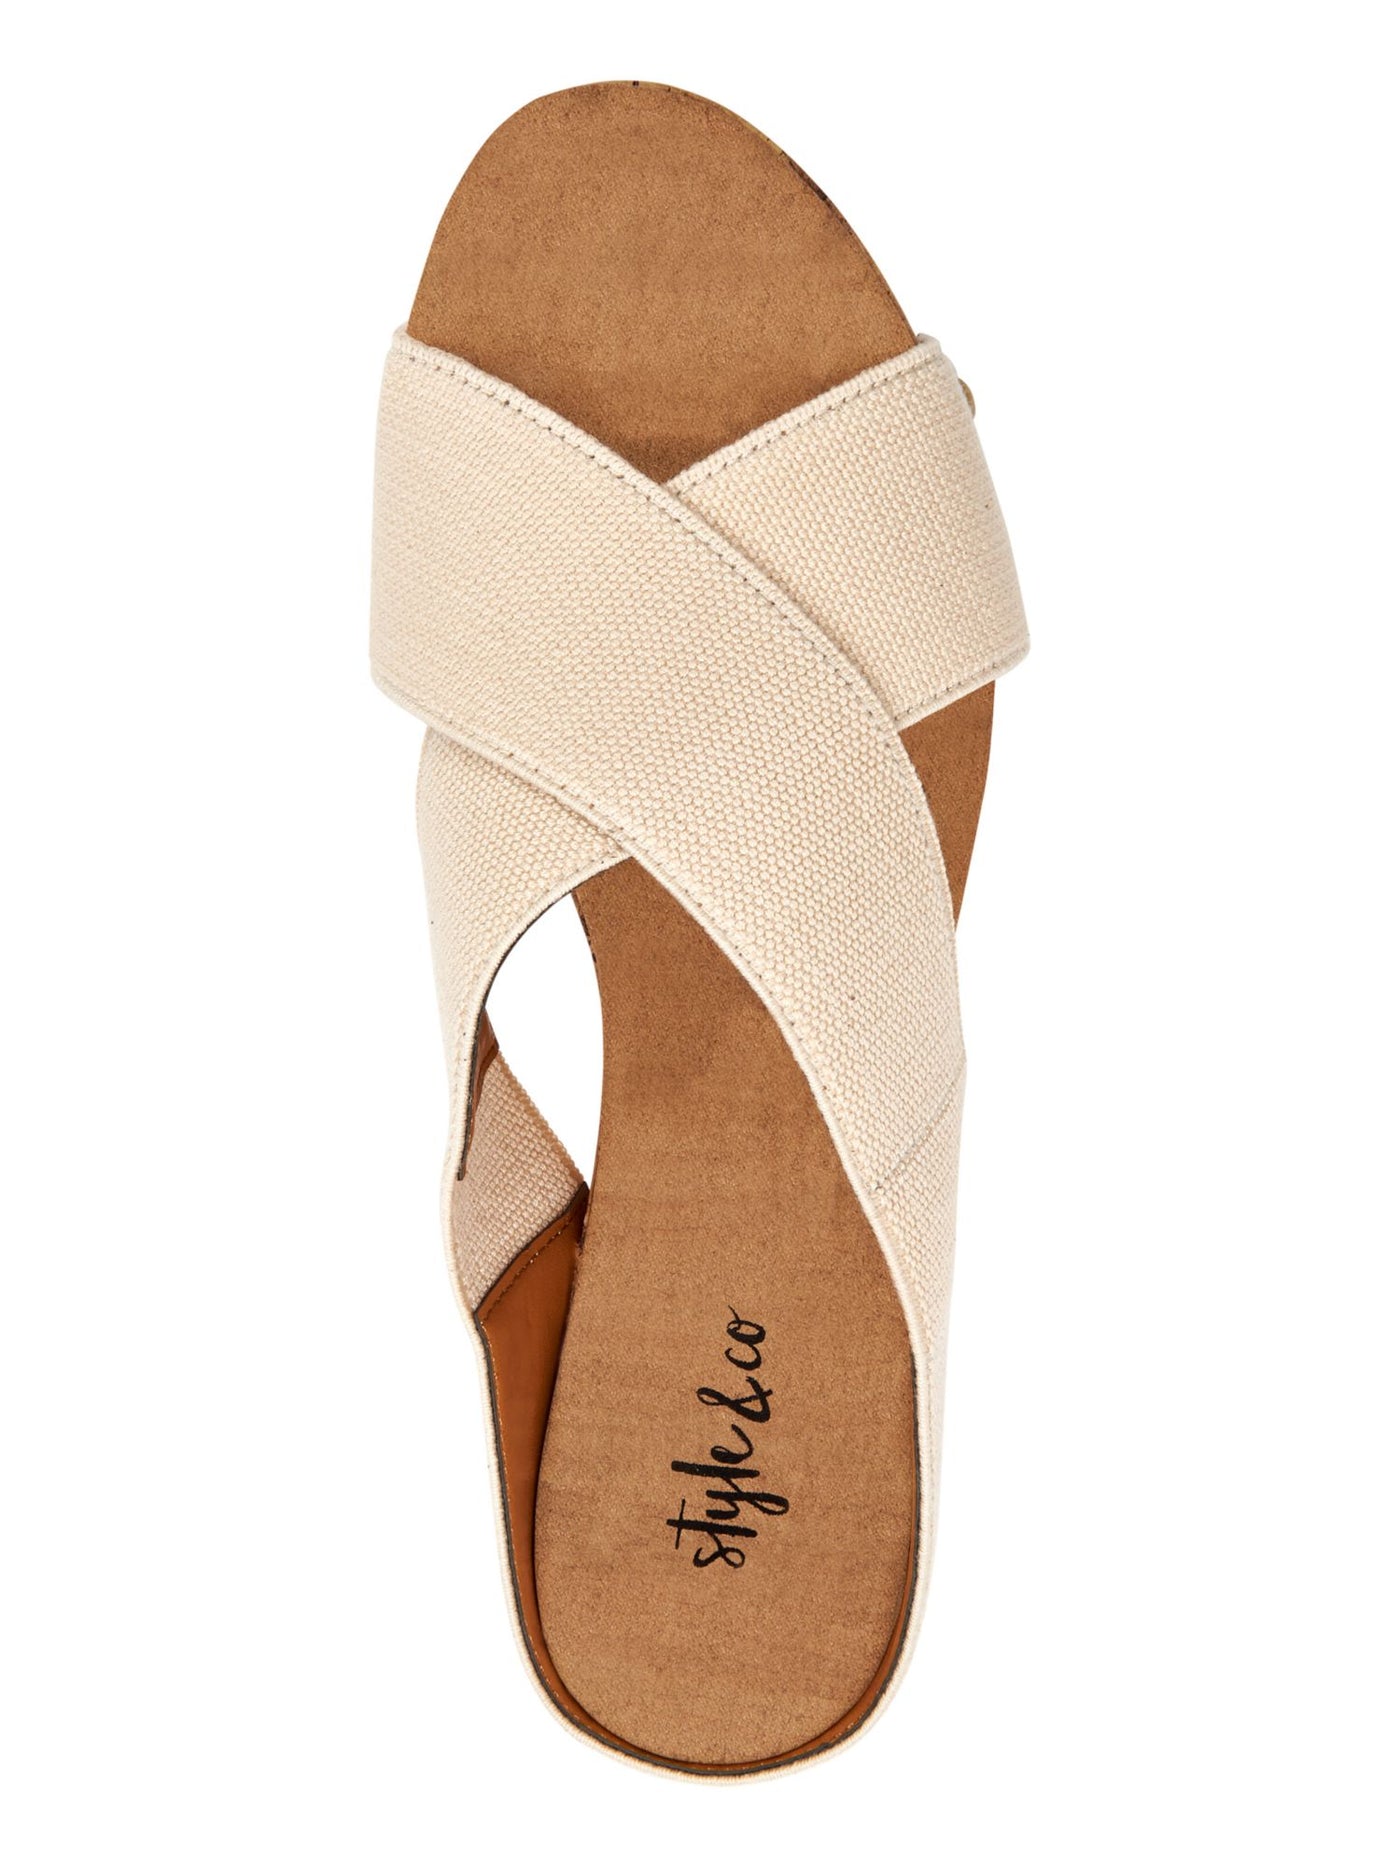 STYLE & COMPANY Womens Beige Crisscross Strap 1 Platform Studded Almond Toe Wedge Slip On Sandals Shoes 7.5 M